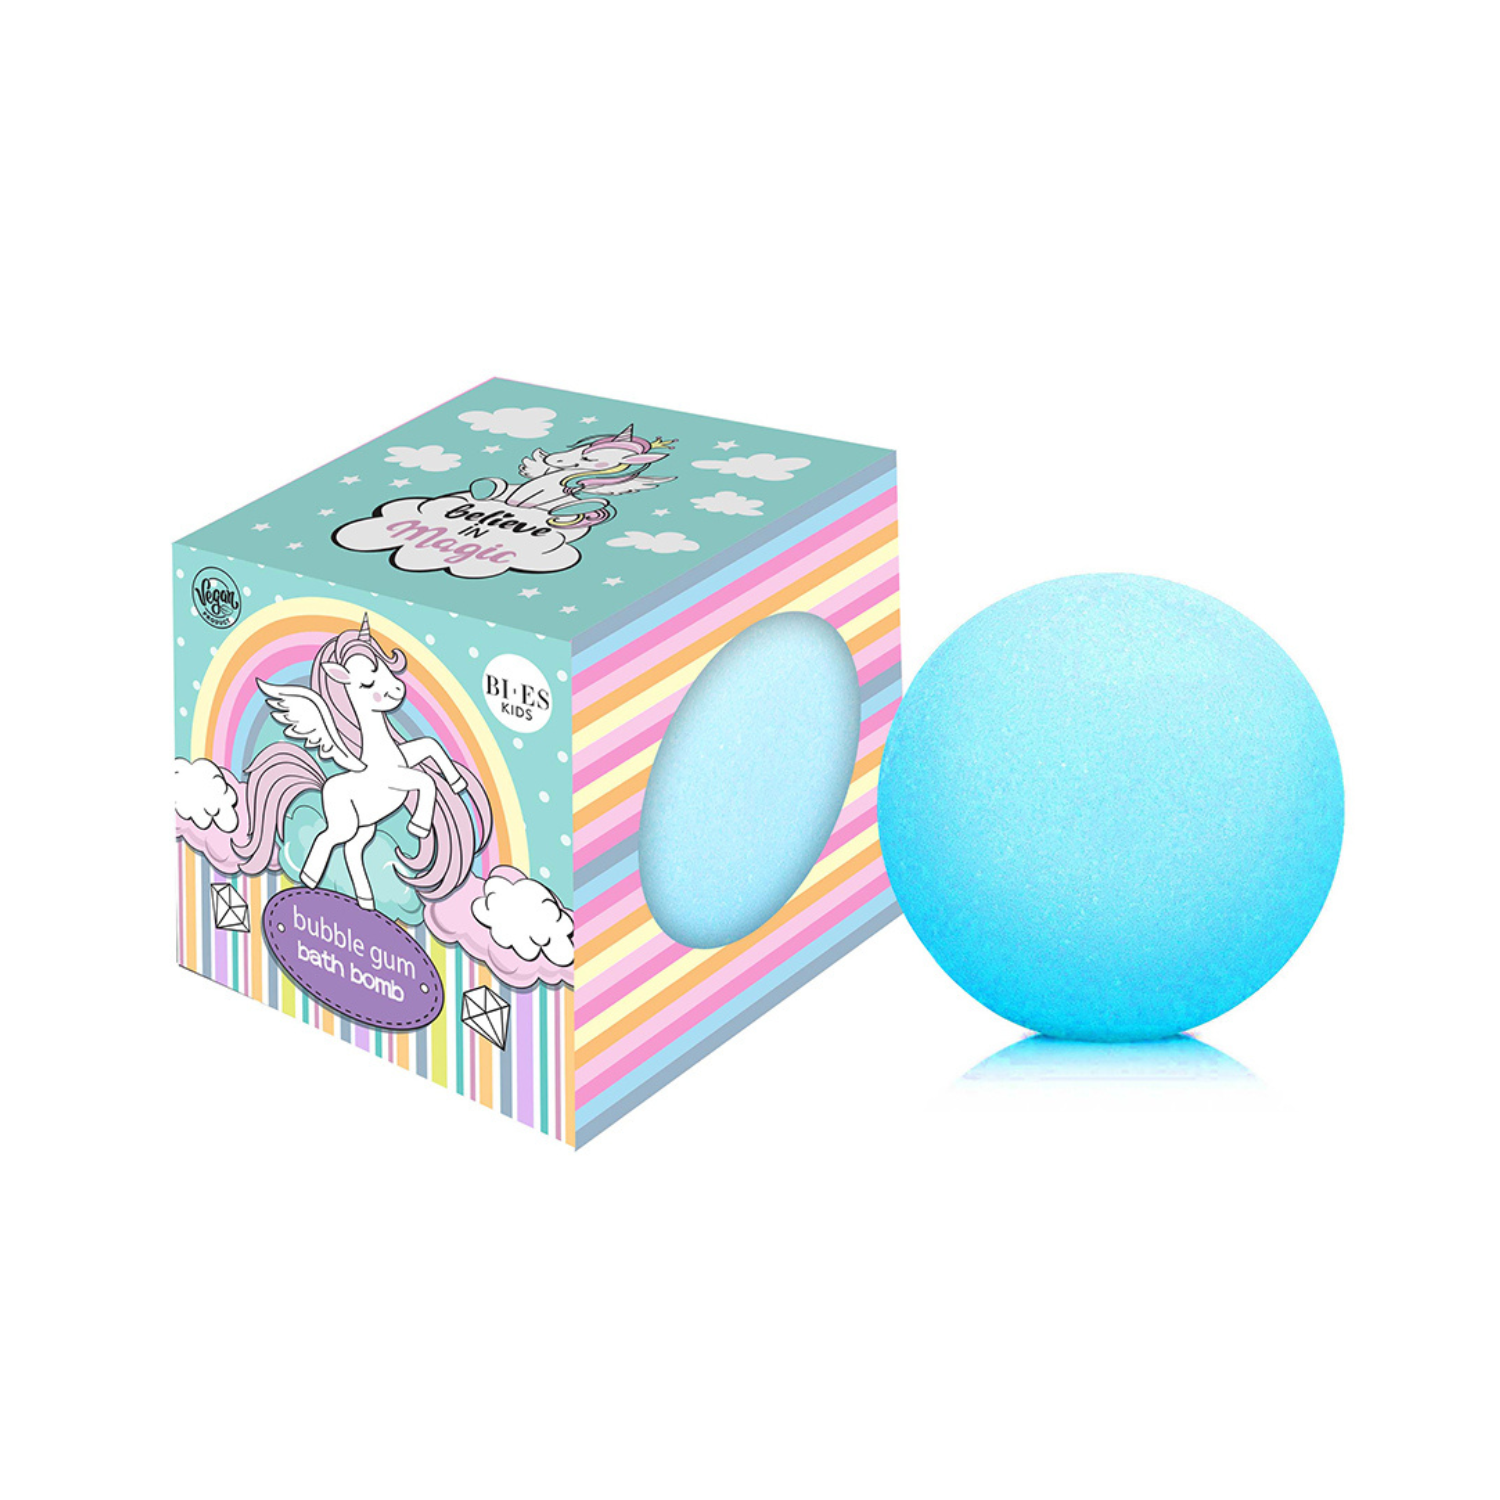 Bomba de baie Unicorn cu bubble gum, 165 g, Bi Es